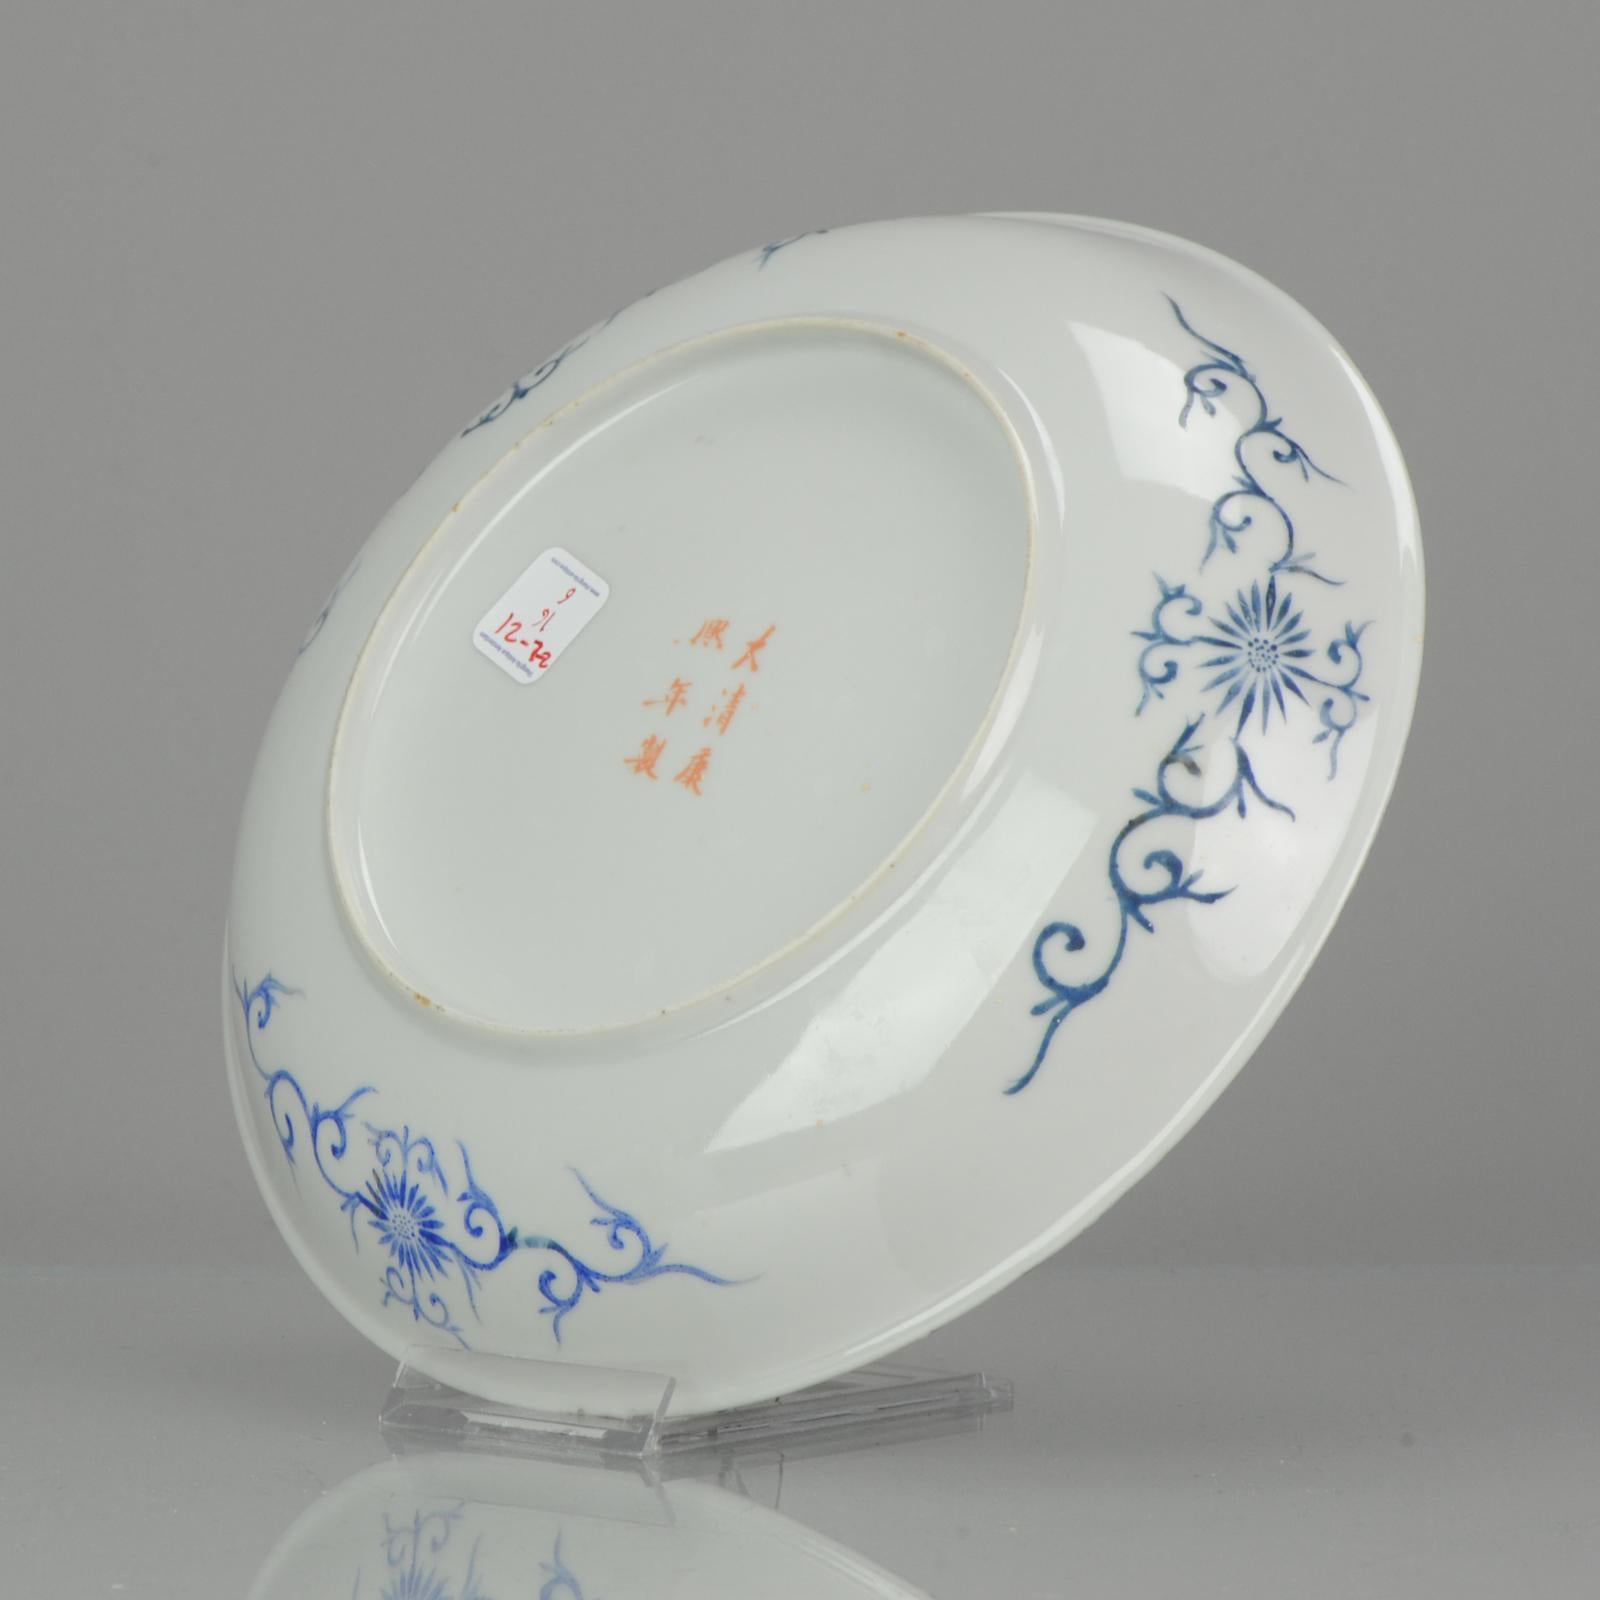 Antique Kangxi Marked Fencai Plate Chinese Porcelain China Bats FLowers 2